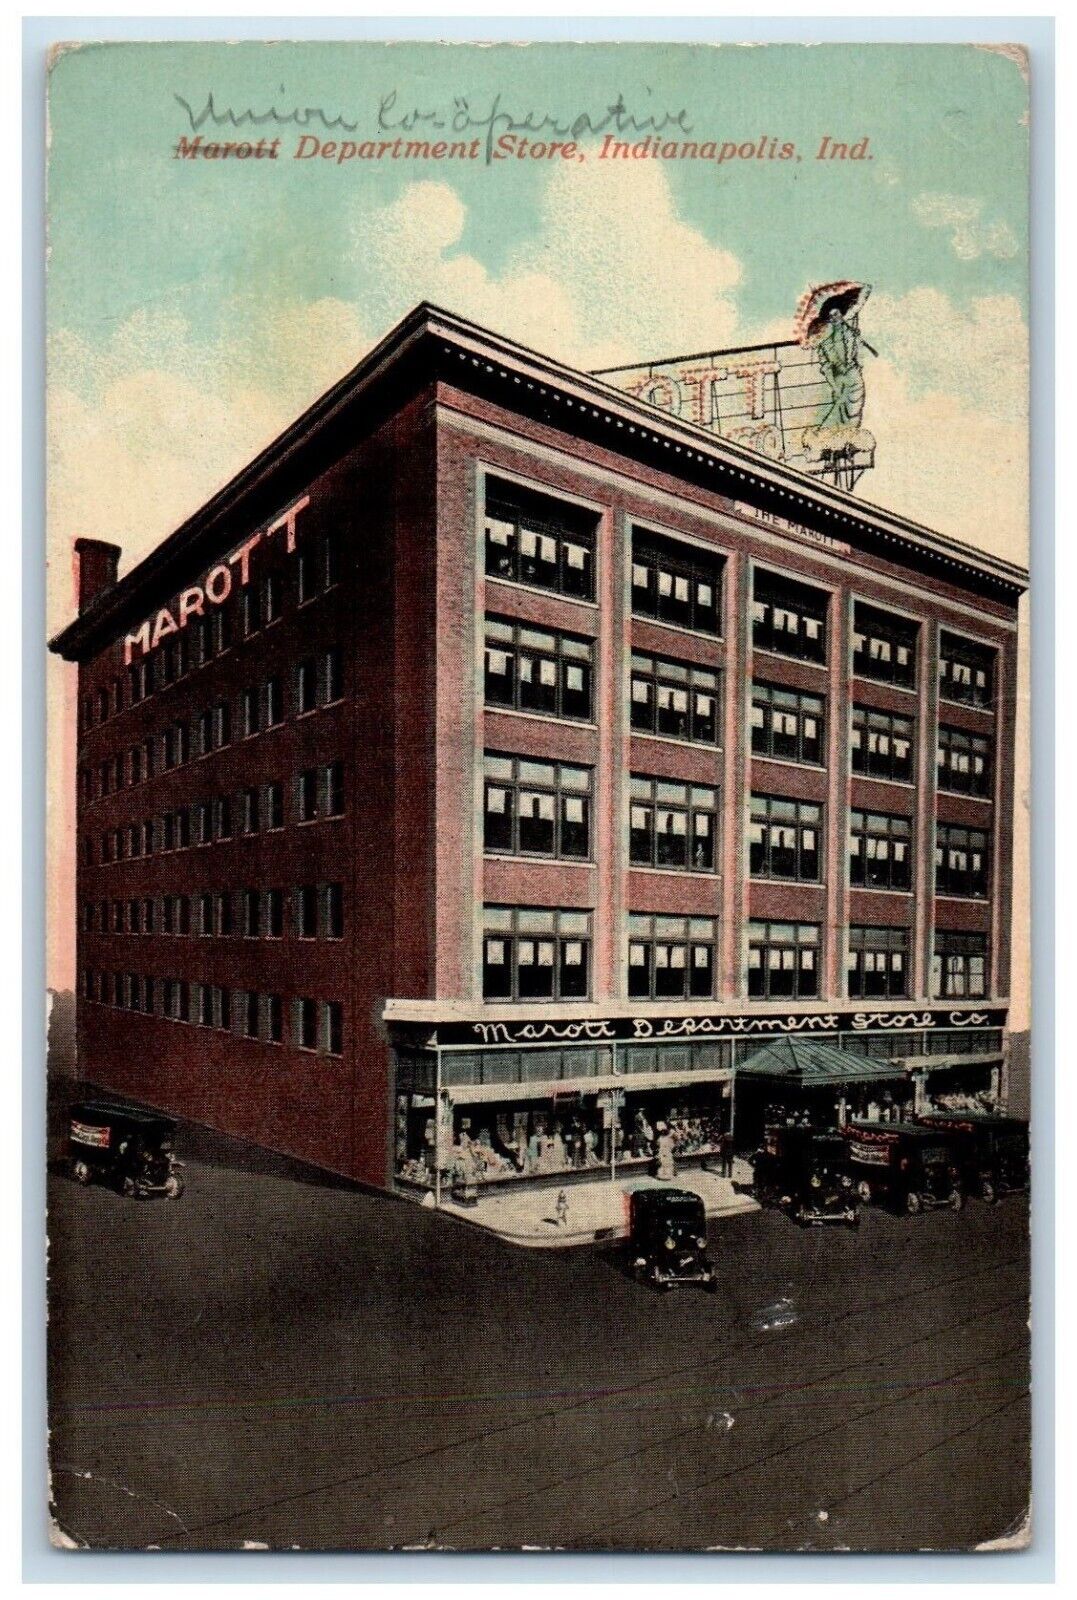 1914 Exterior Marott Department Store Indianapolis Indiana IN Vintage Postcard